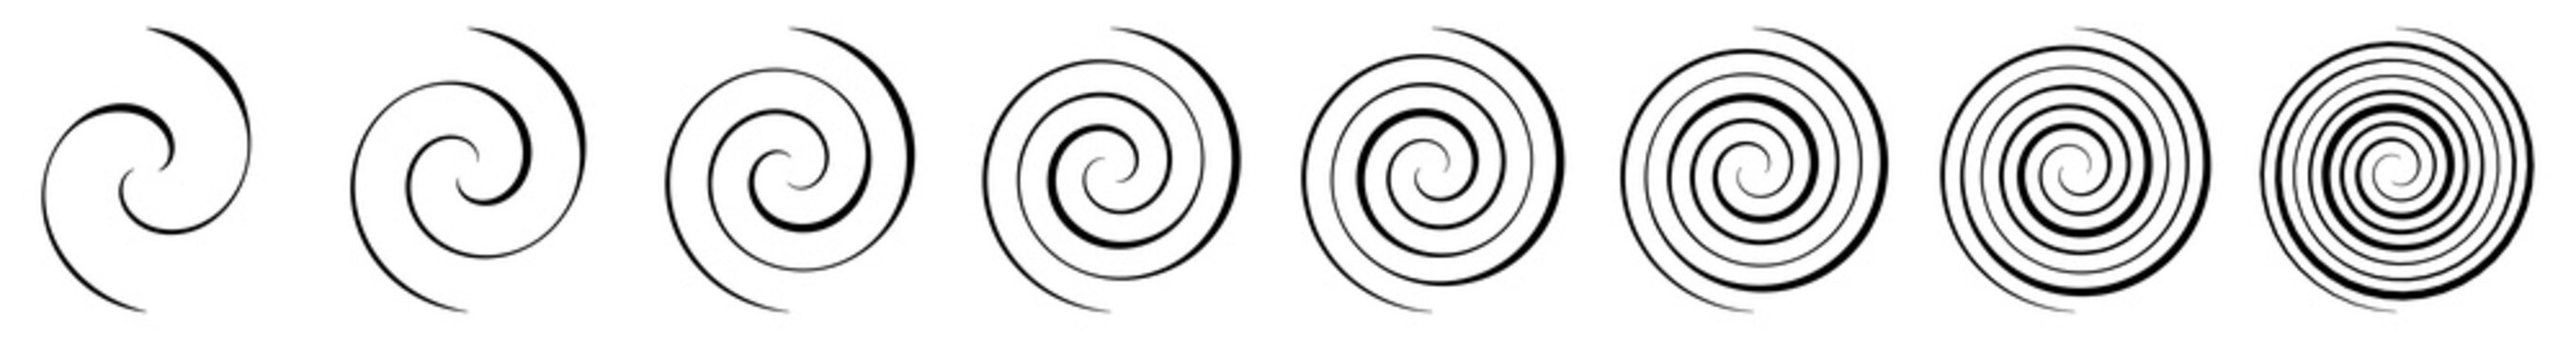 Spiral, swirl, twirl and whirl element. Helix, volute ripple, vortex shape